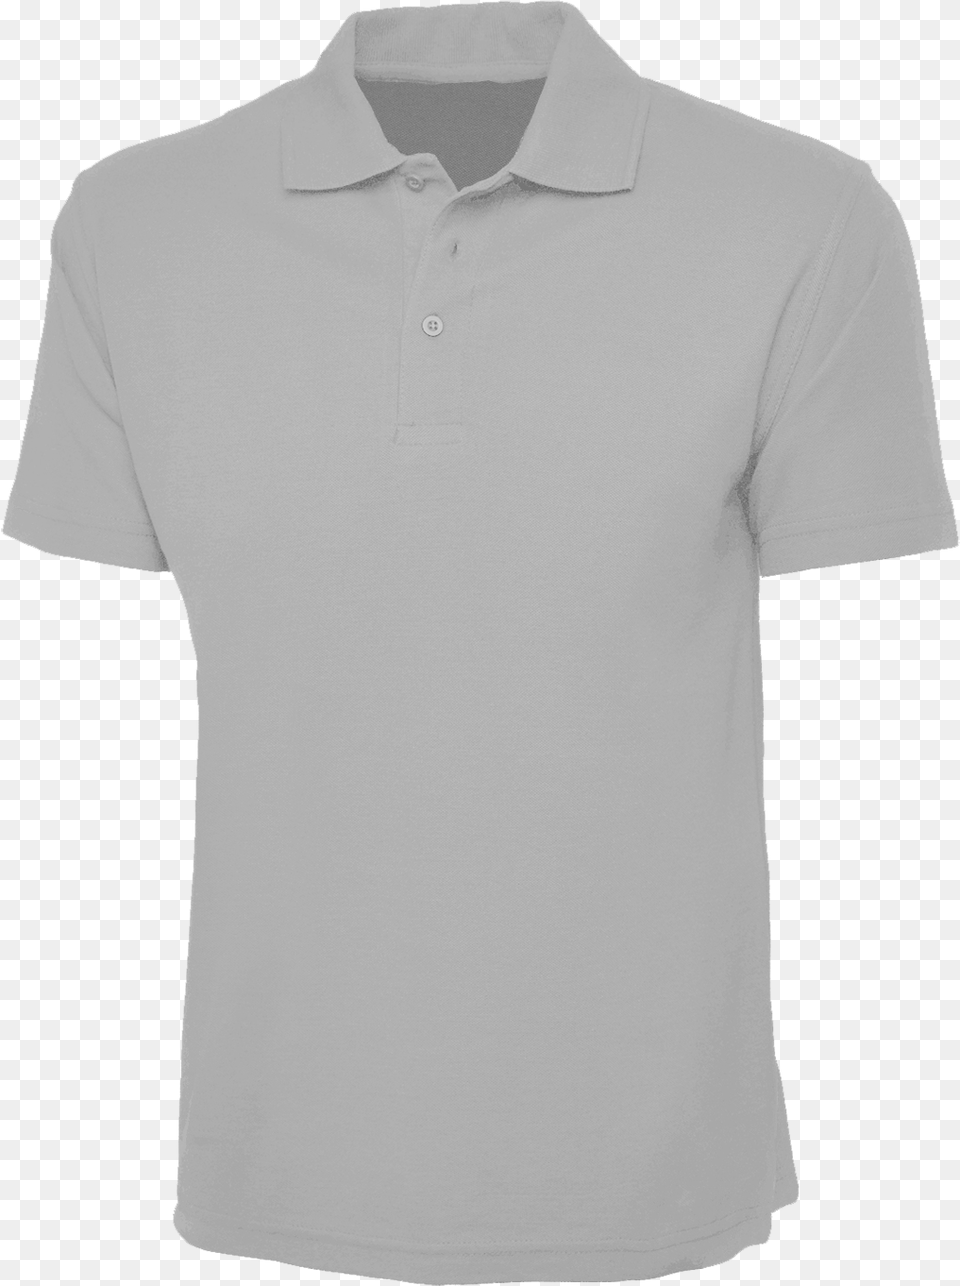 Plain White Polo T Shirts Lacoste Polo Shirts Powder Blue, Clothing, Shirt, T-shirt Free Transparent Png